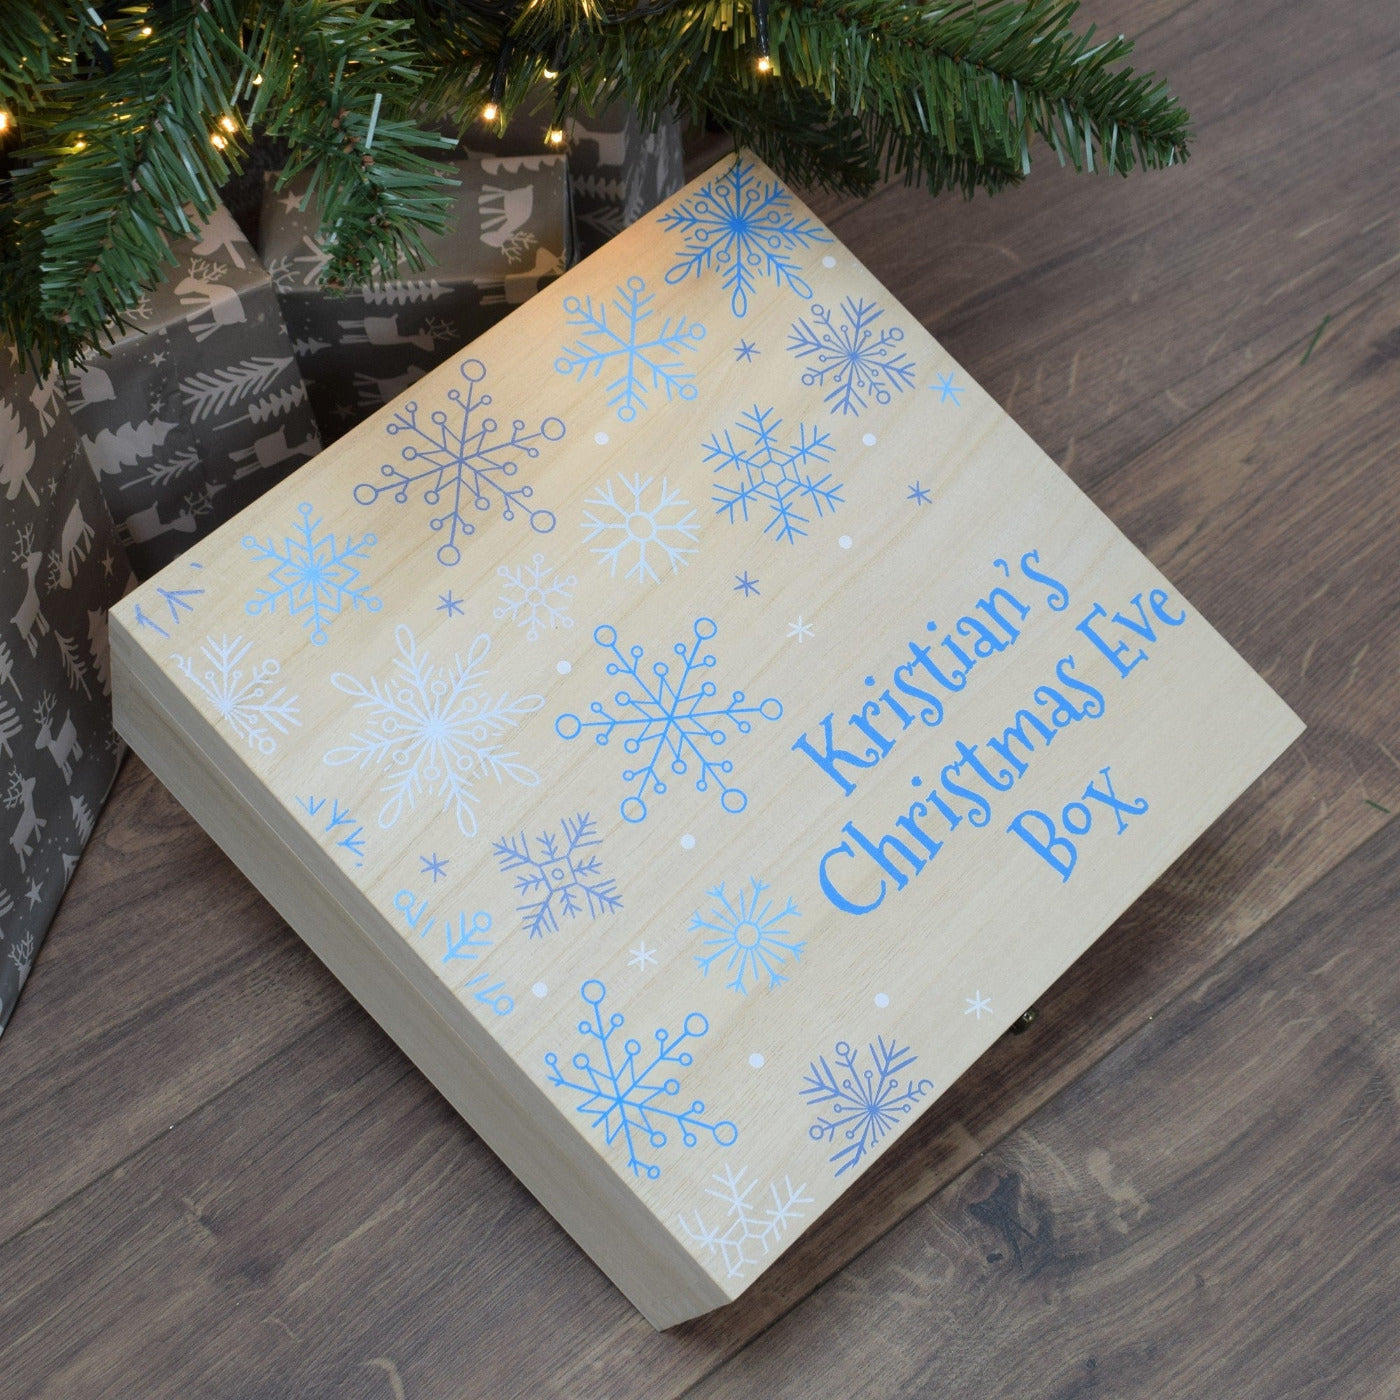 Christmas Eve Box - Snowflakes Design